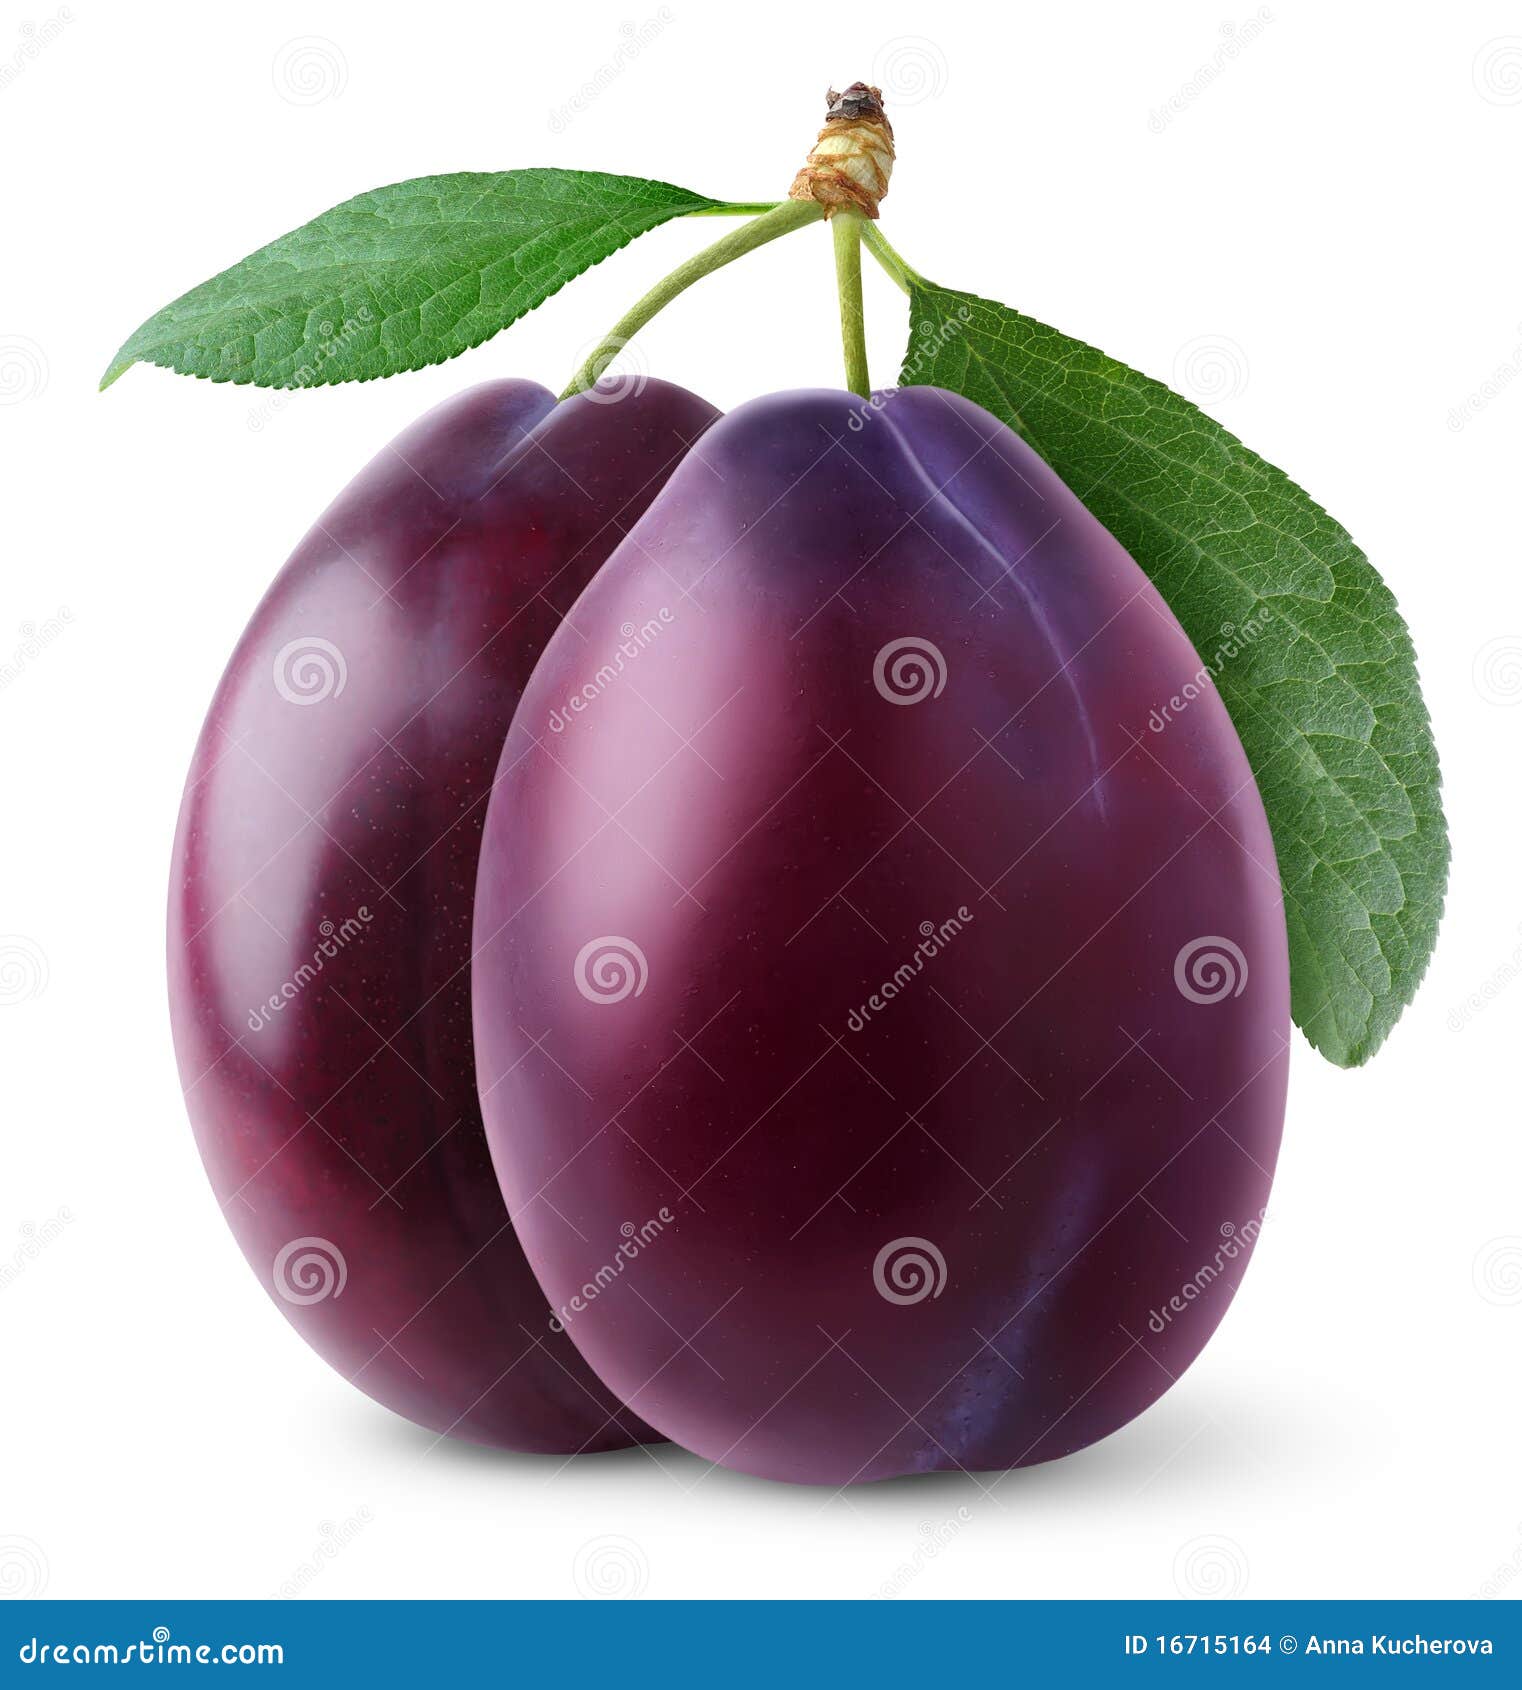  plums